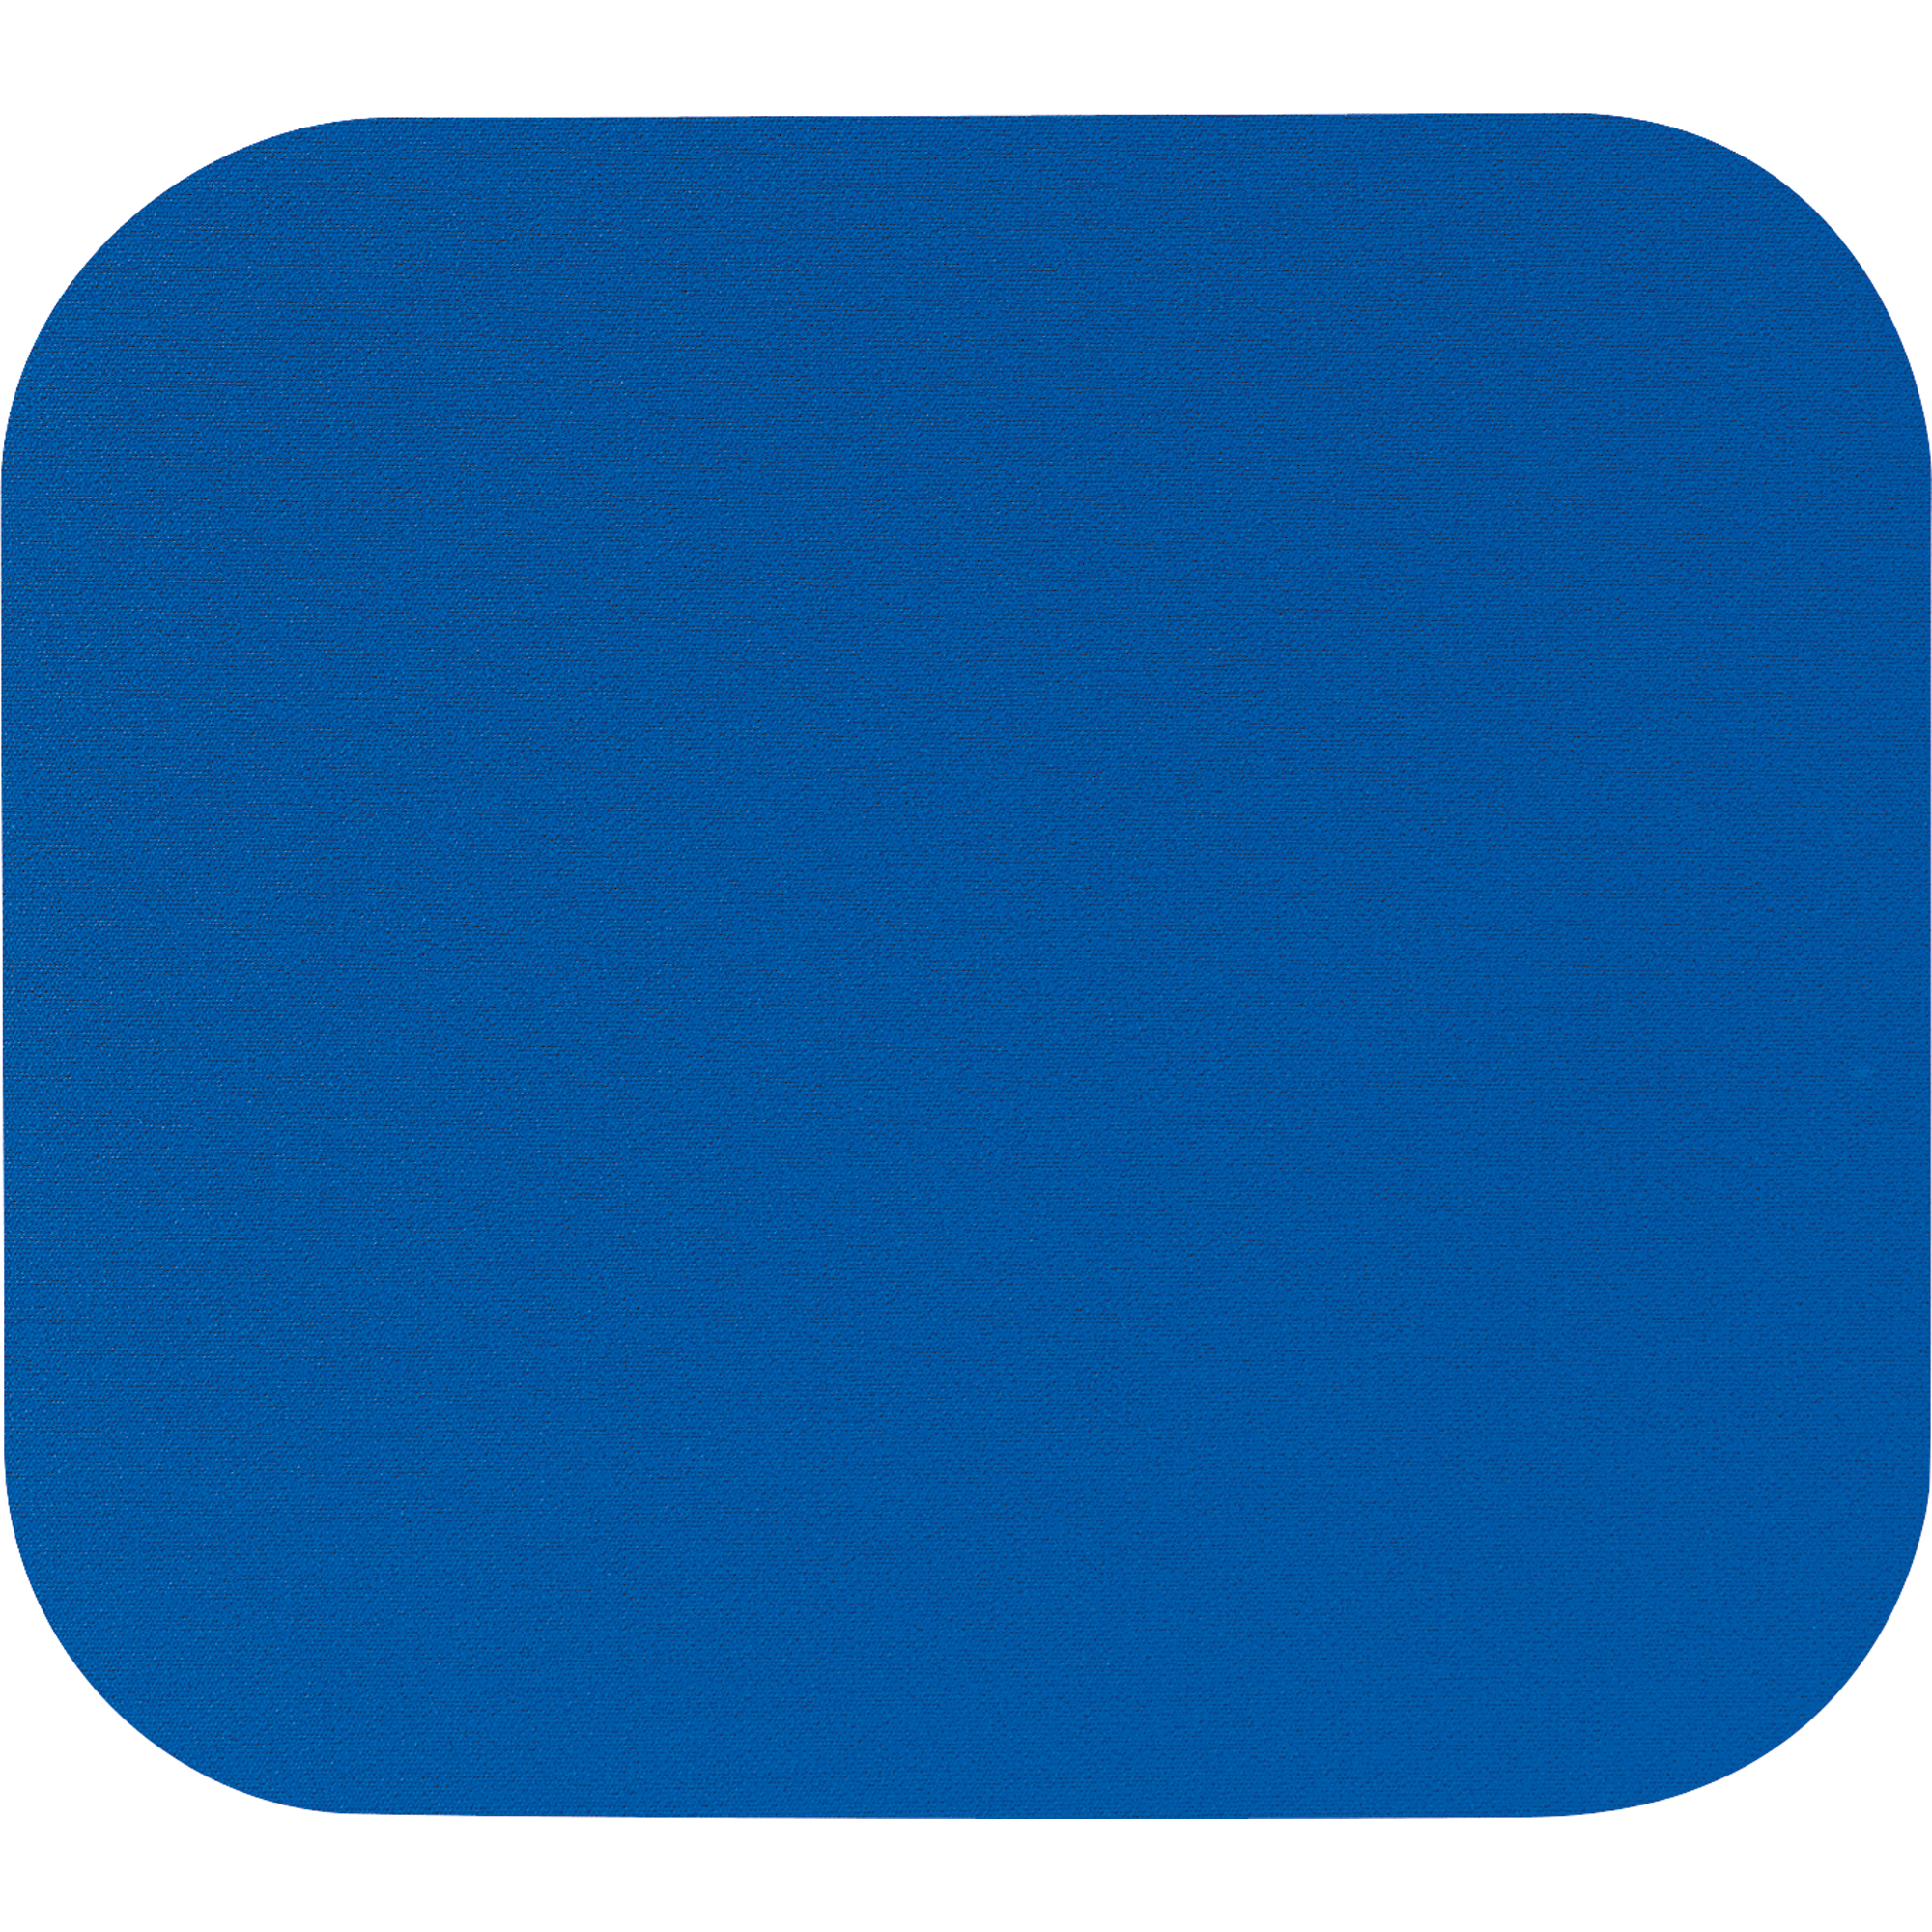 x FELLOWES 58021 cm) Mauspad cm (20,32 blue 22,86